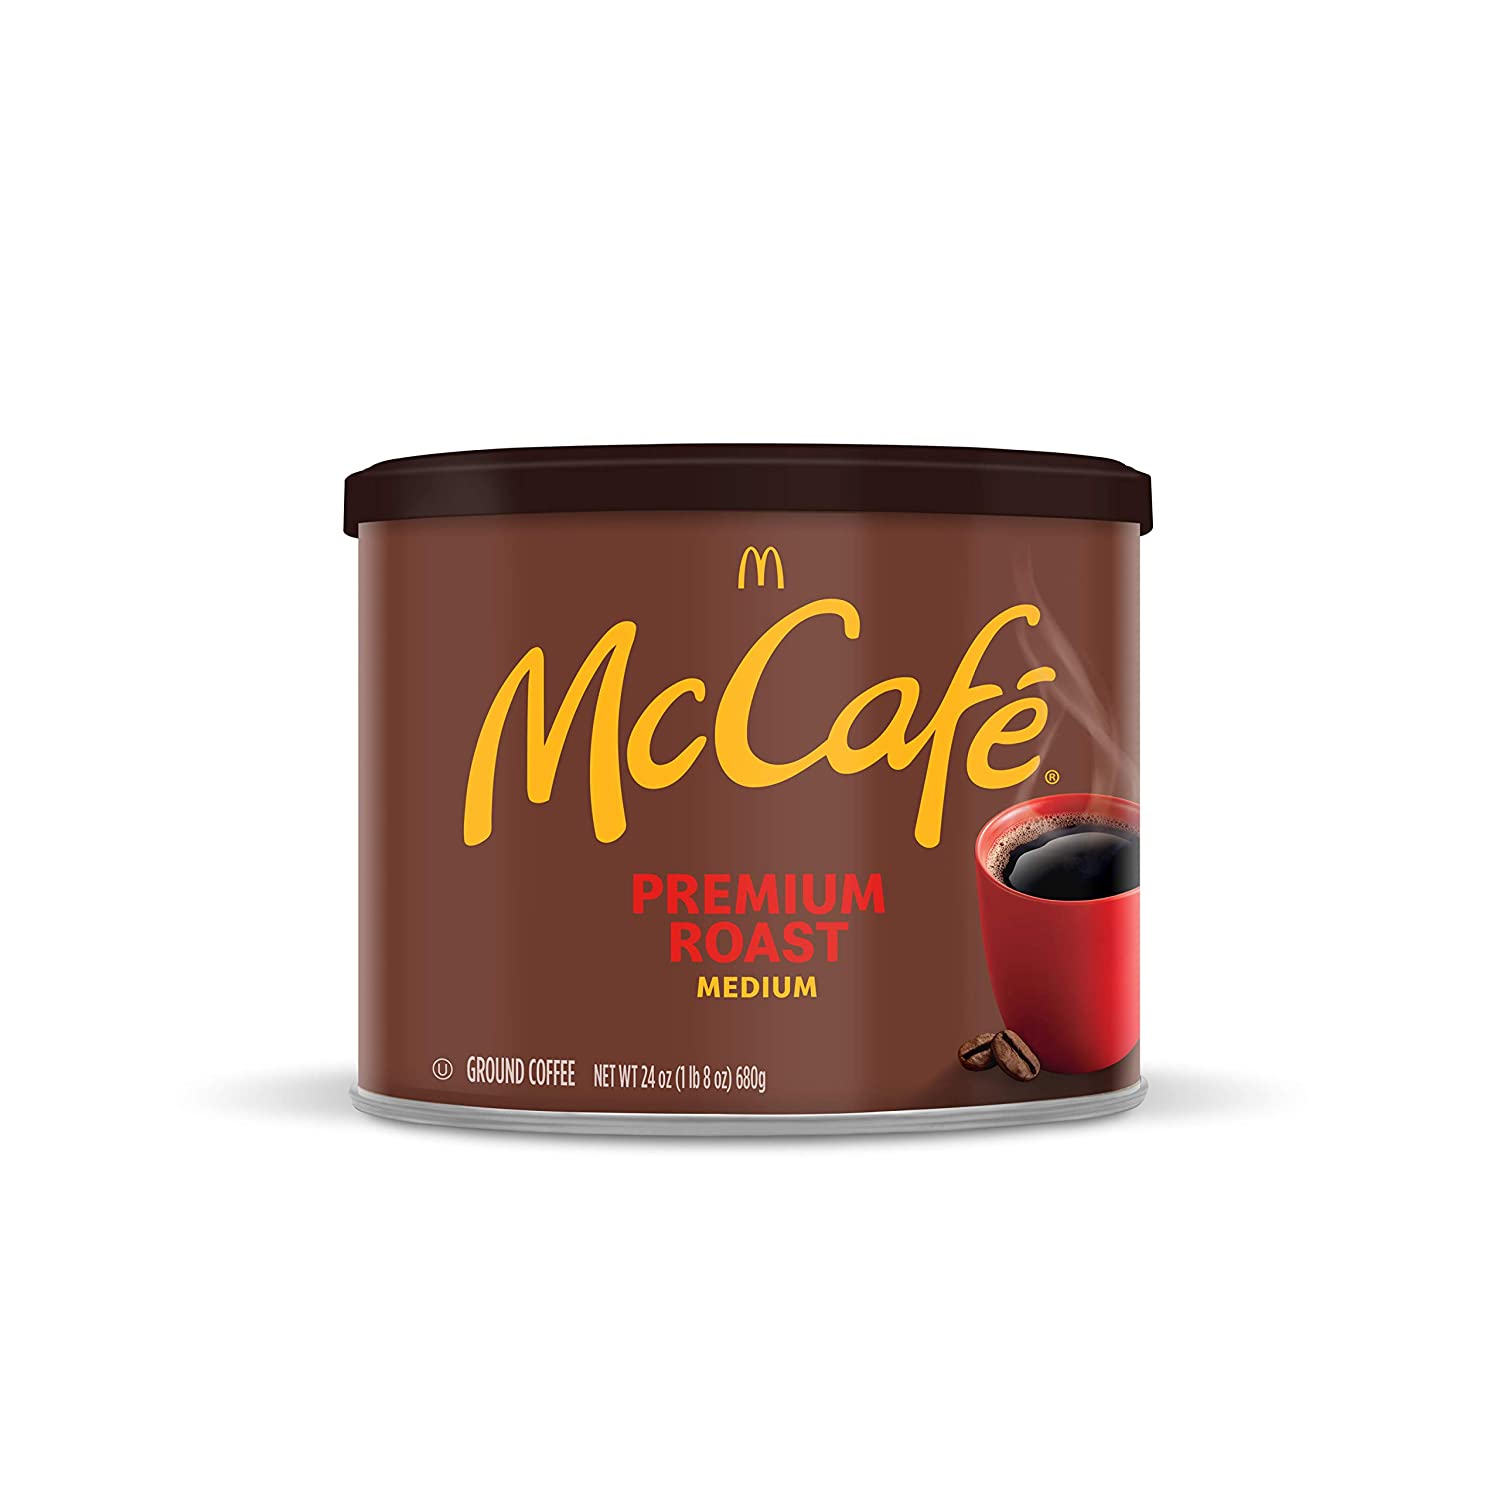 McCafé Premium Medium Roast Ground Coffee (24 oz Canister) $3.58